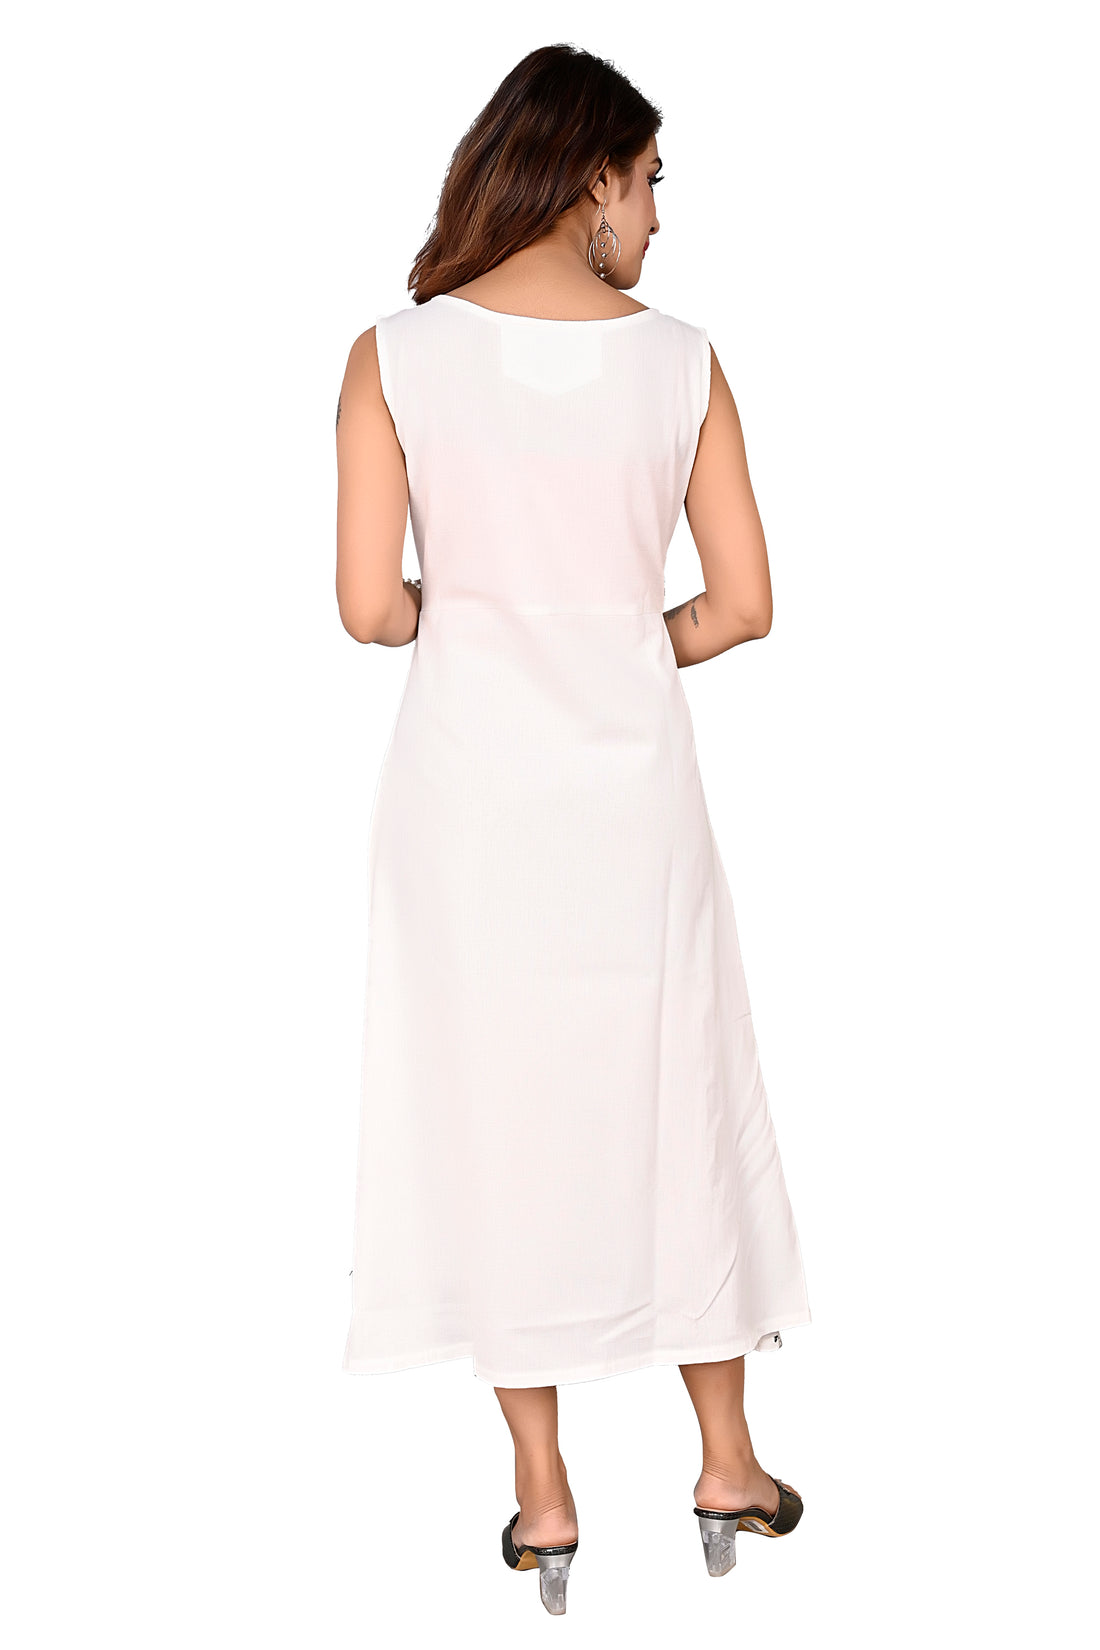 Nirmal online Premium cotton tunic Dress for Women in white colour